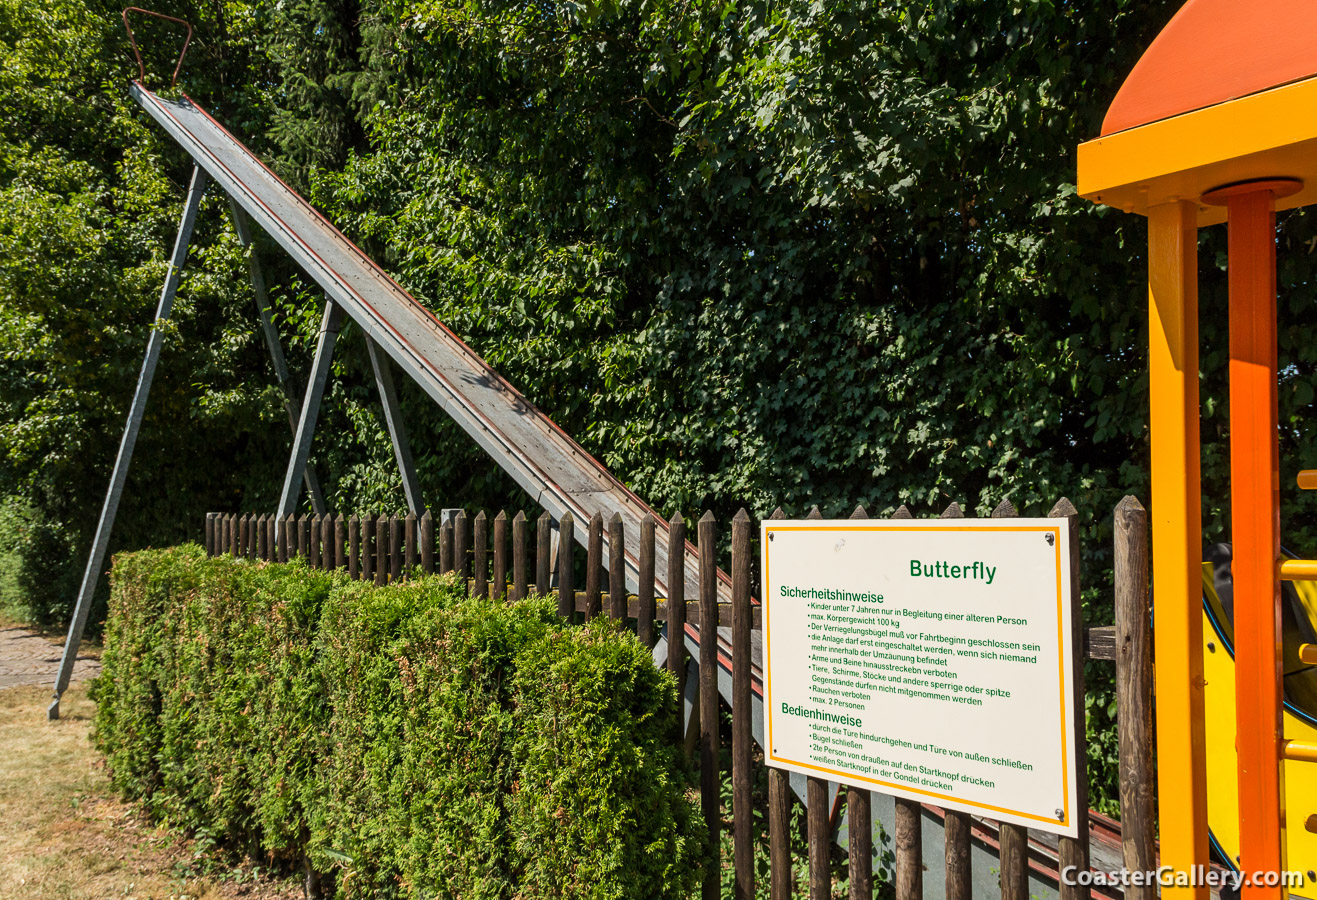 Butterfly roller coaster at Skyline Park in Bad Wrishofen, Bavaria, Germany